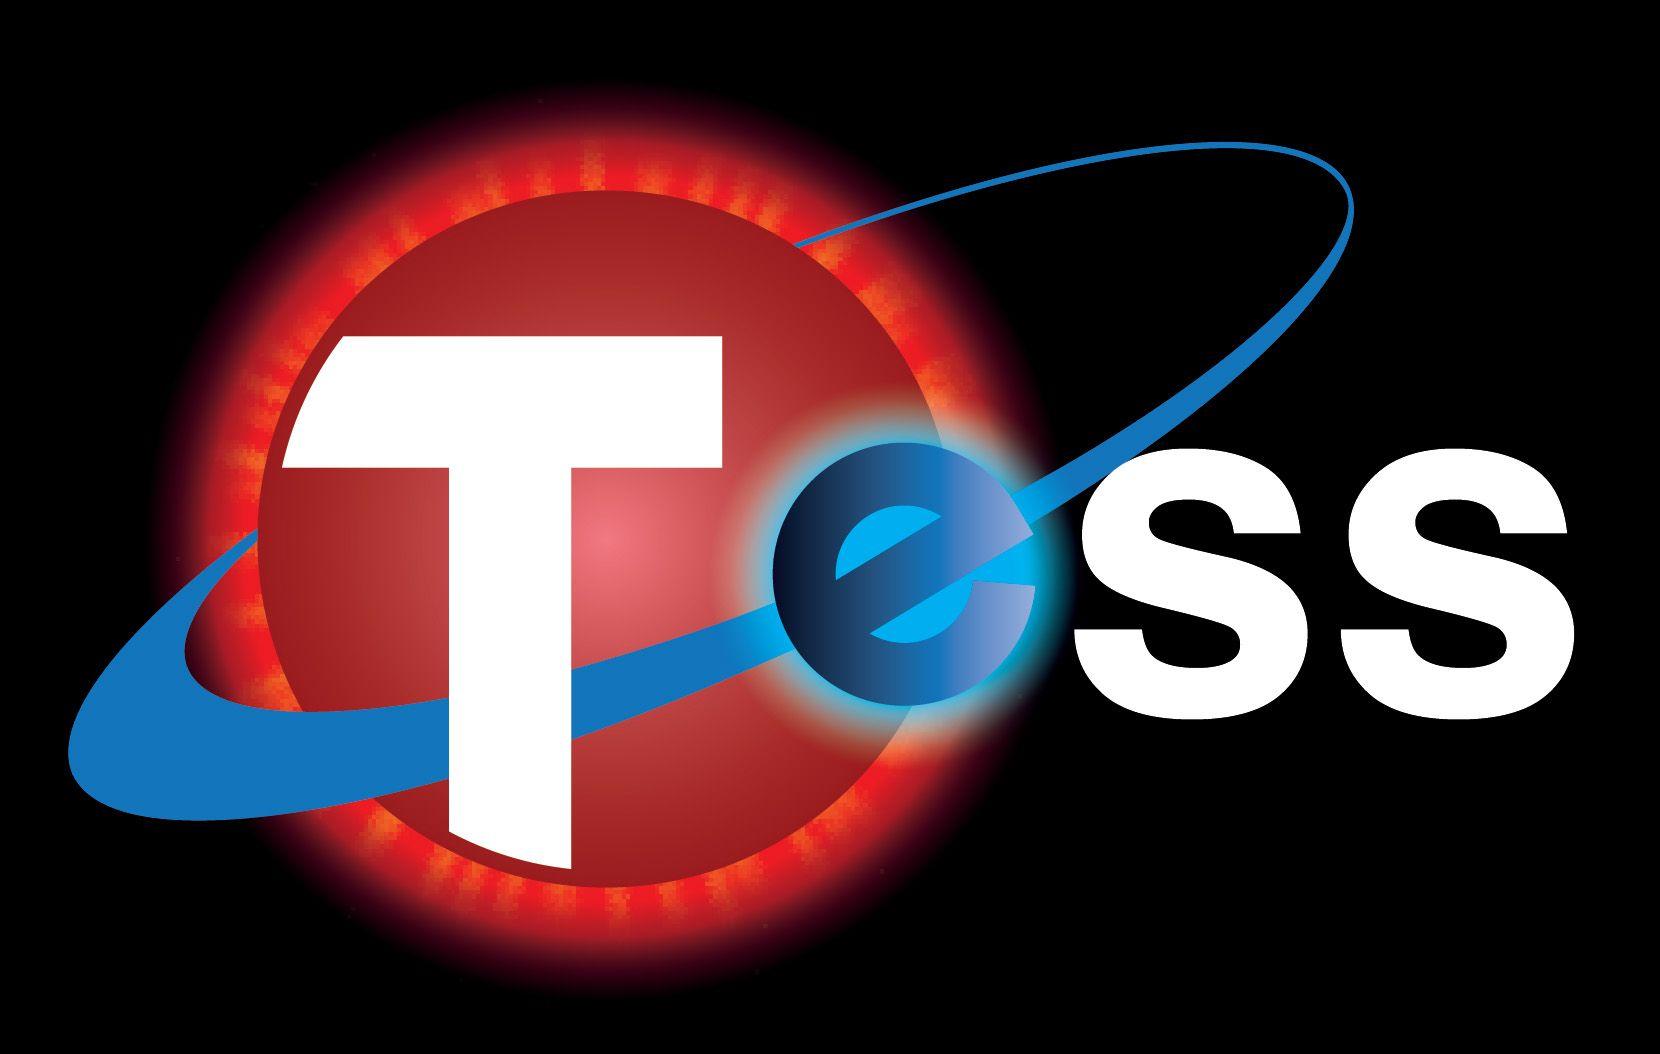 NASA High Resolution Logo - File:TESS logo (black bg).jpg - Wikimedia Commons